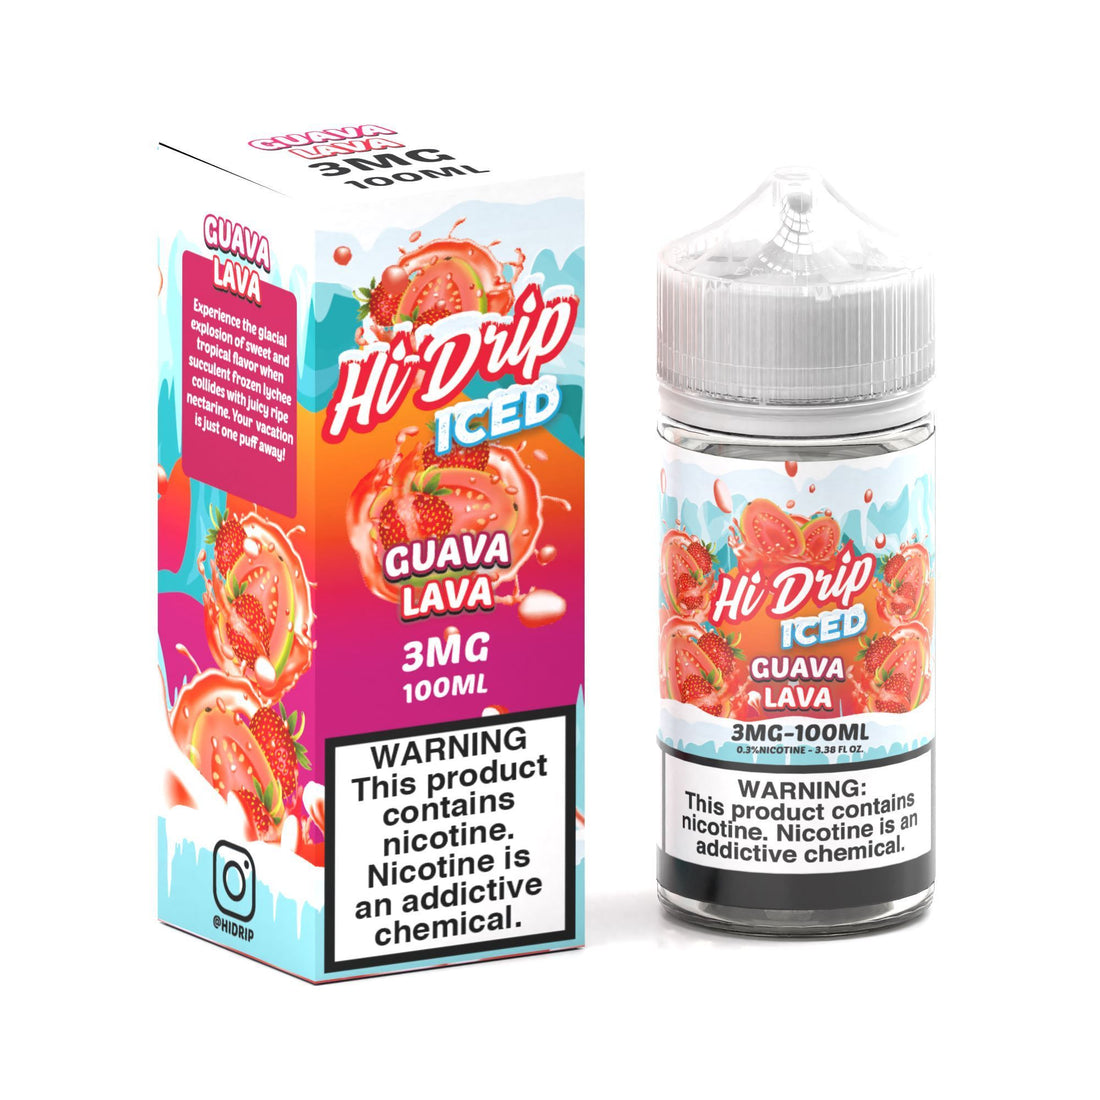 Hi-Drip Iced: Guava Lava